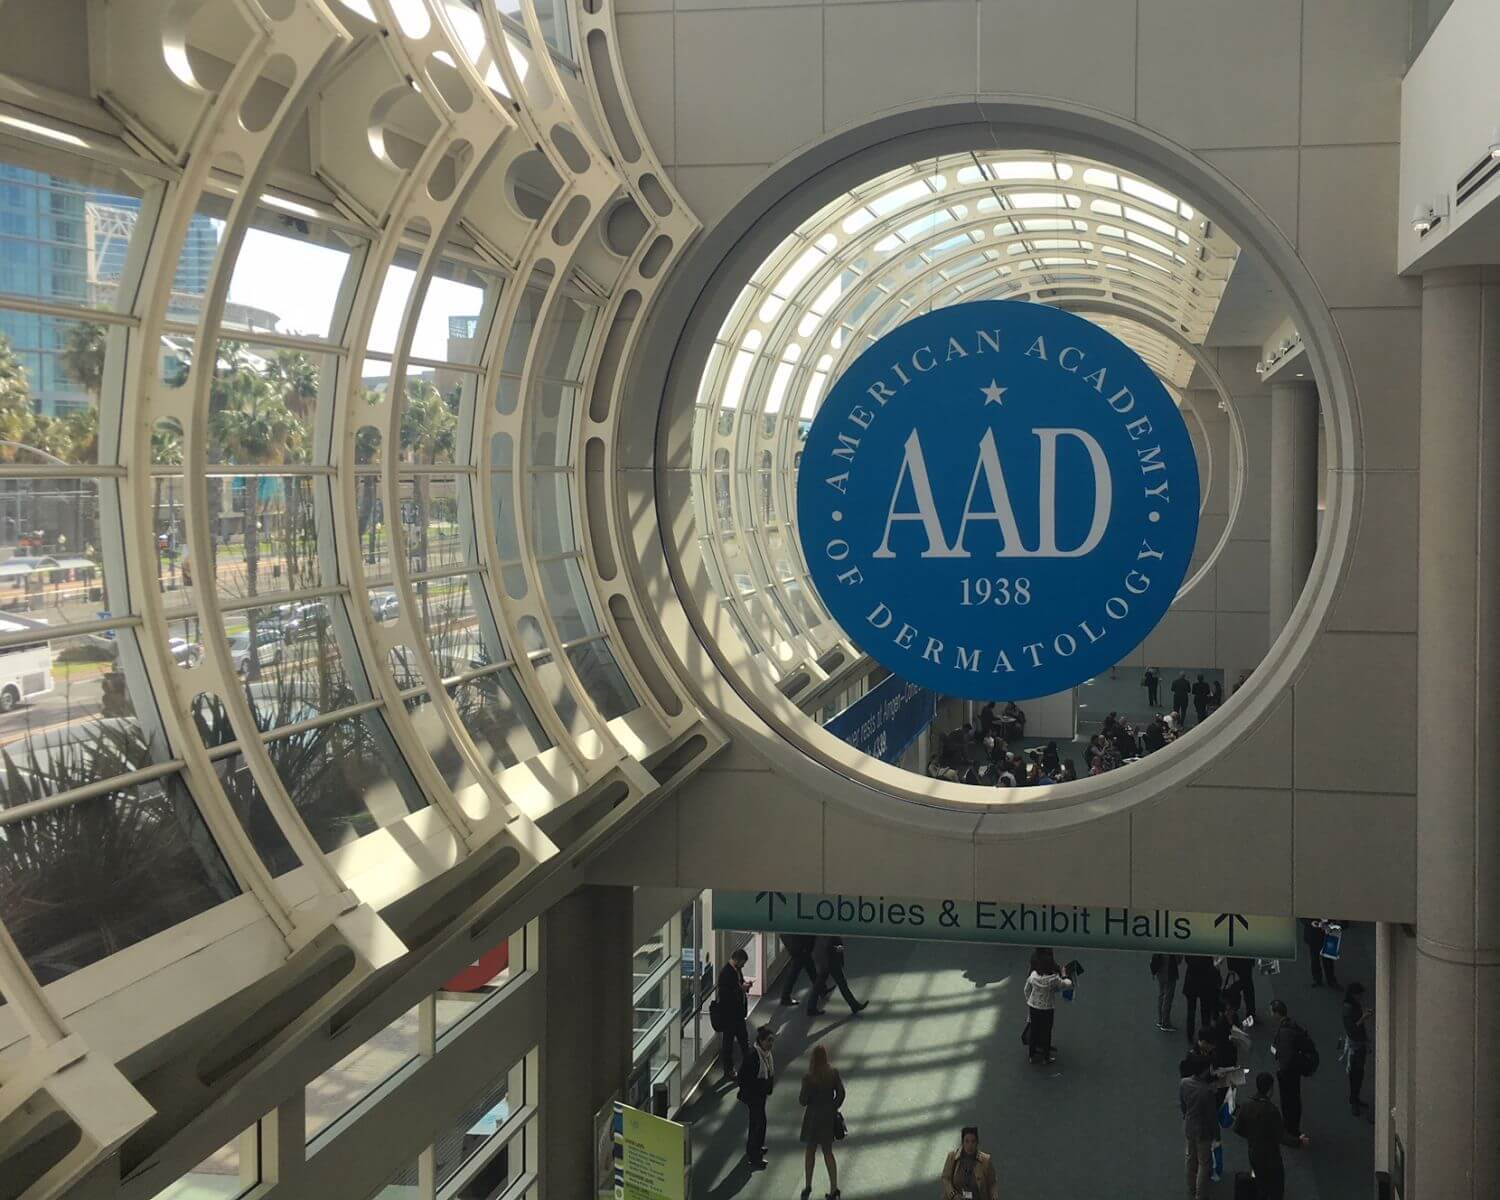 2018 AAD annual meeting